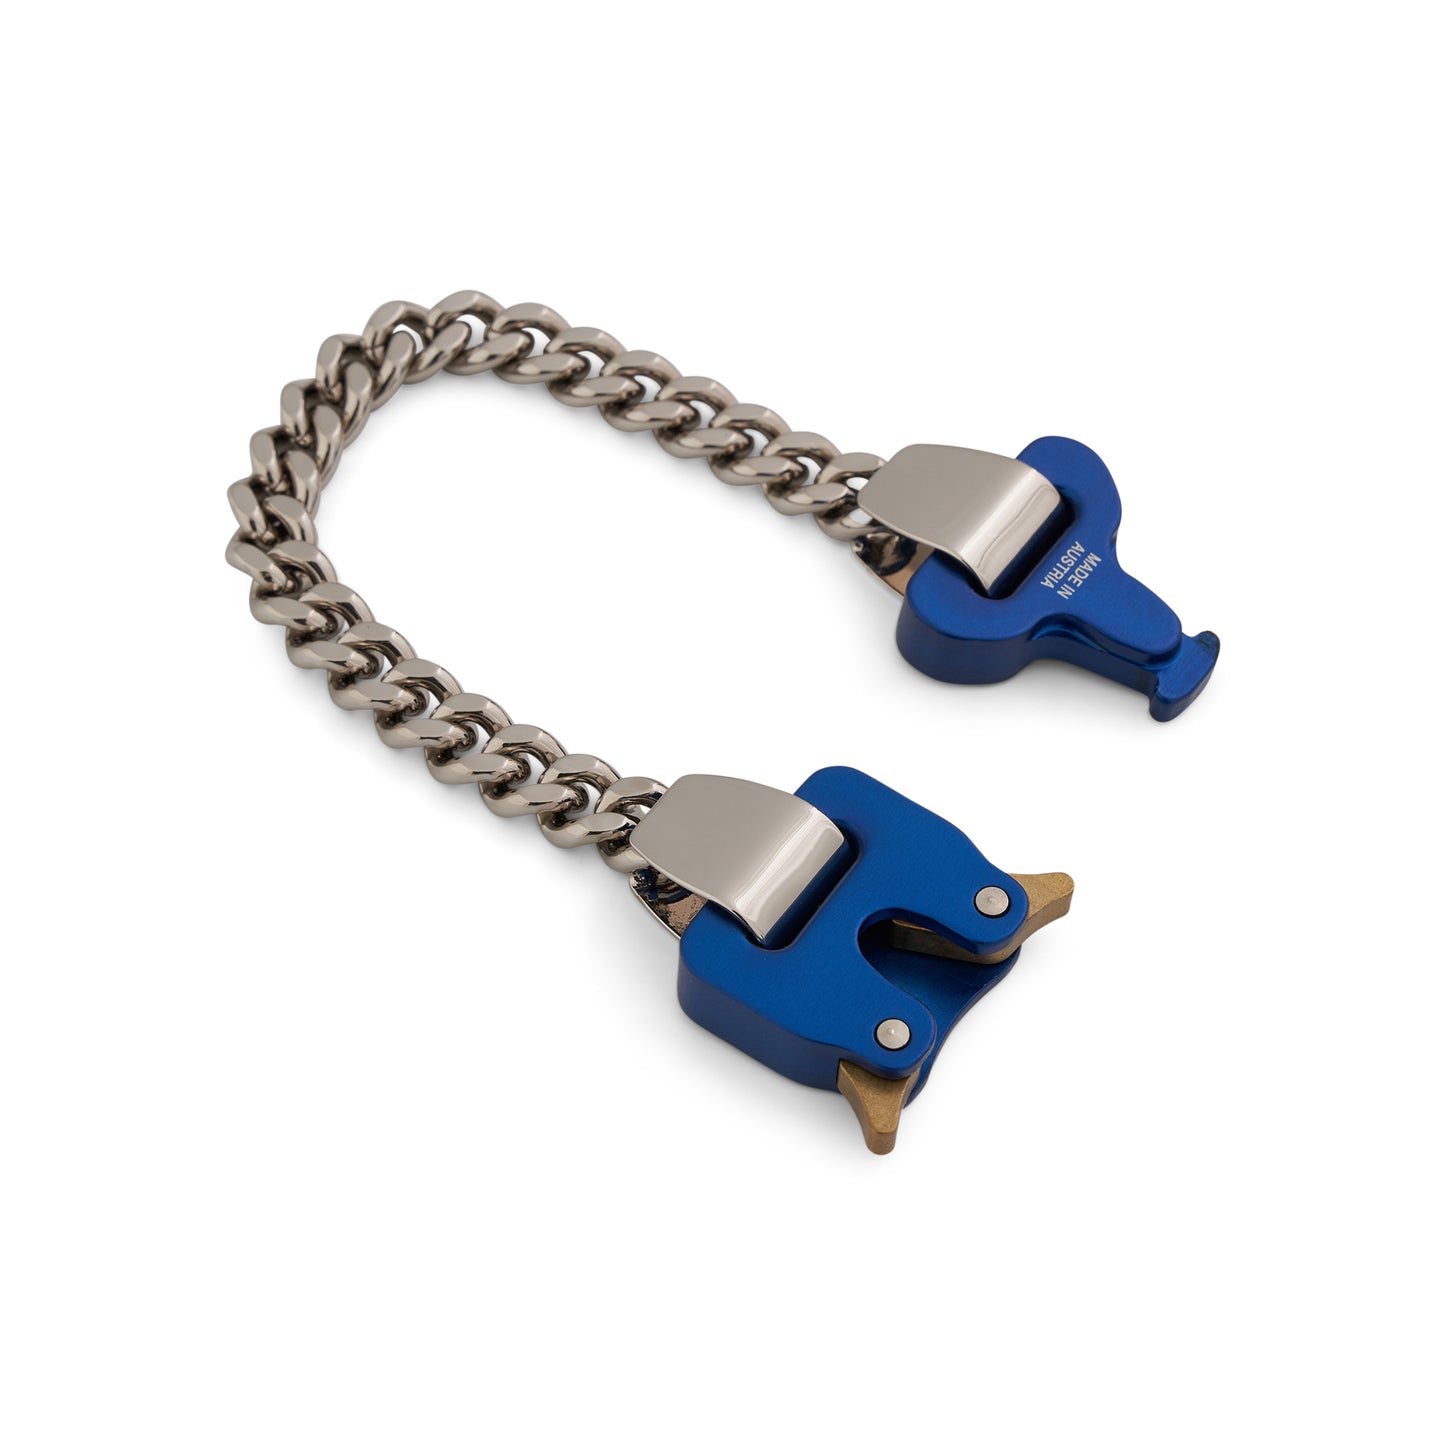 Classic Chainlink Bracelet in Silver/Blue